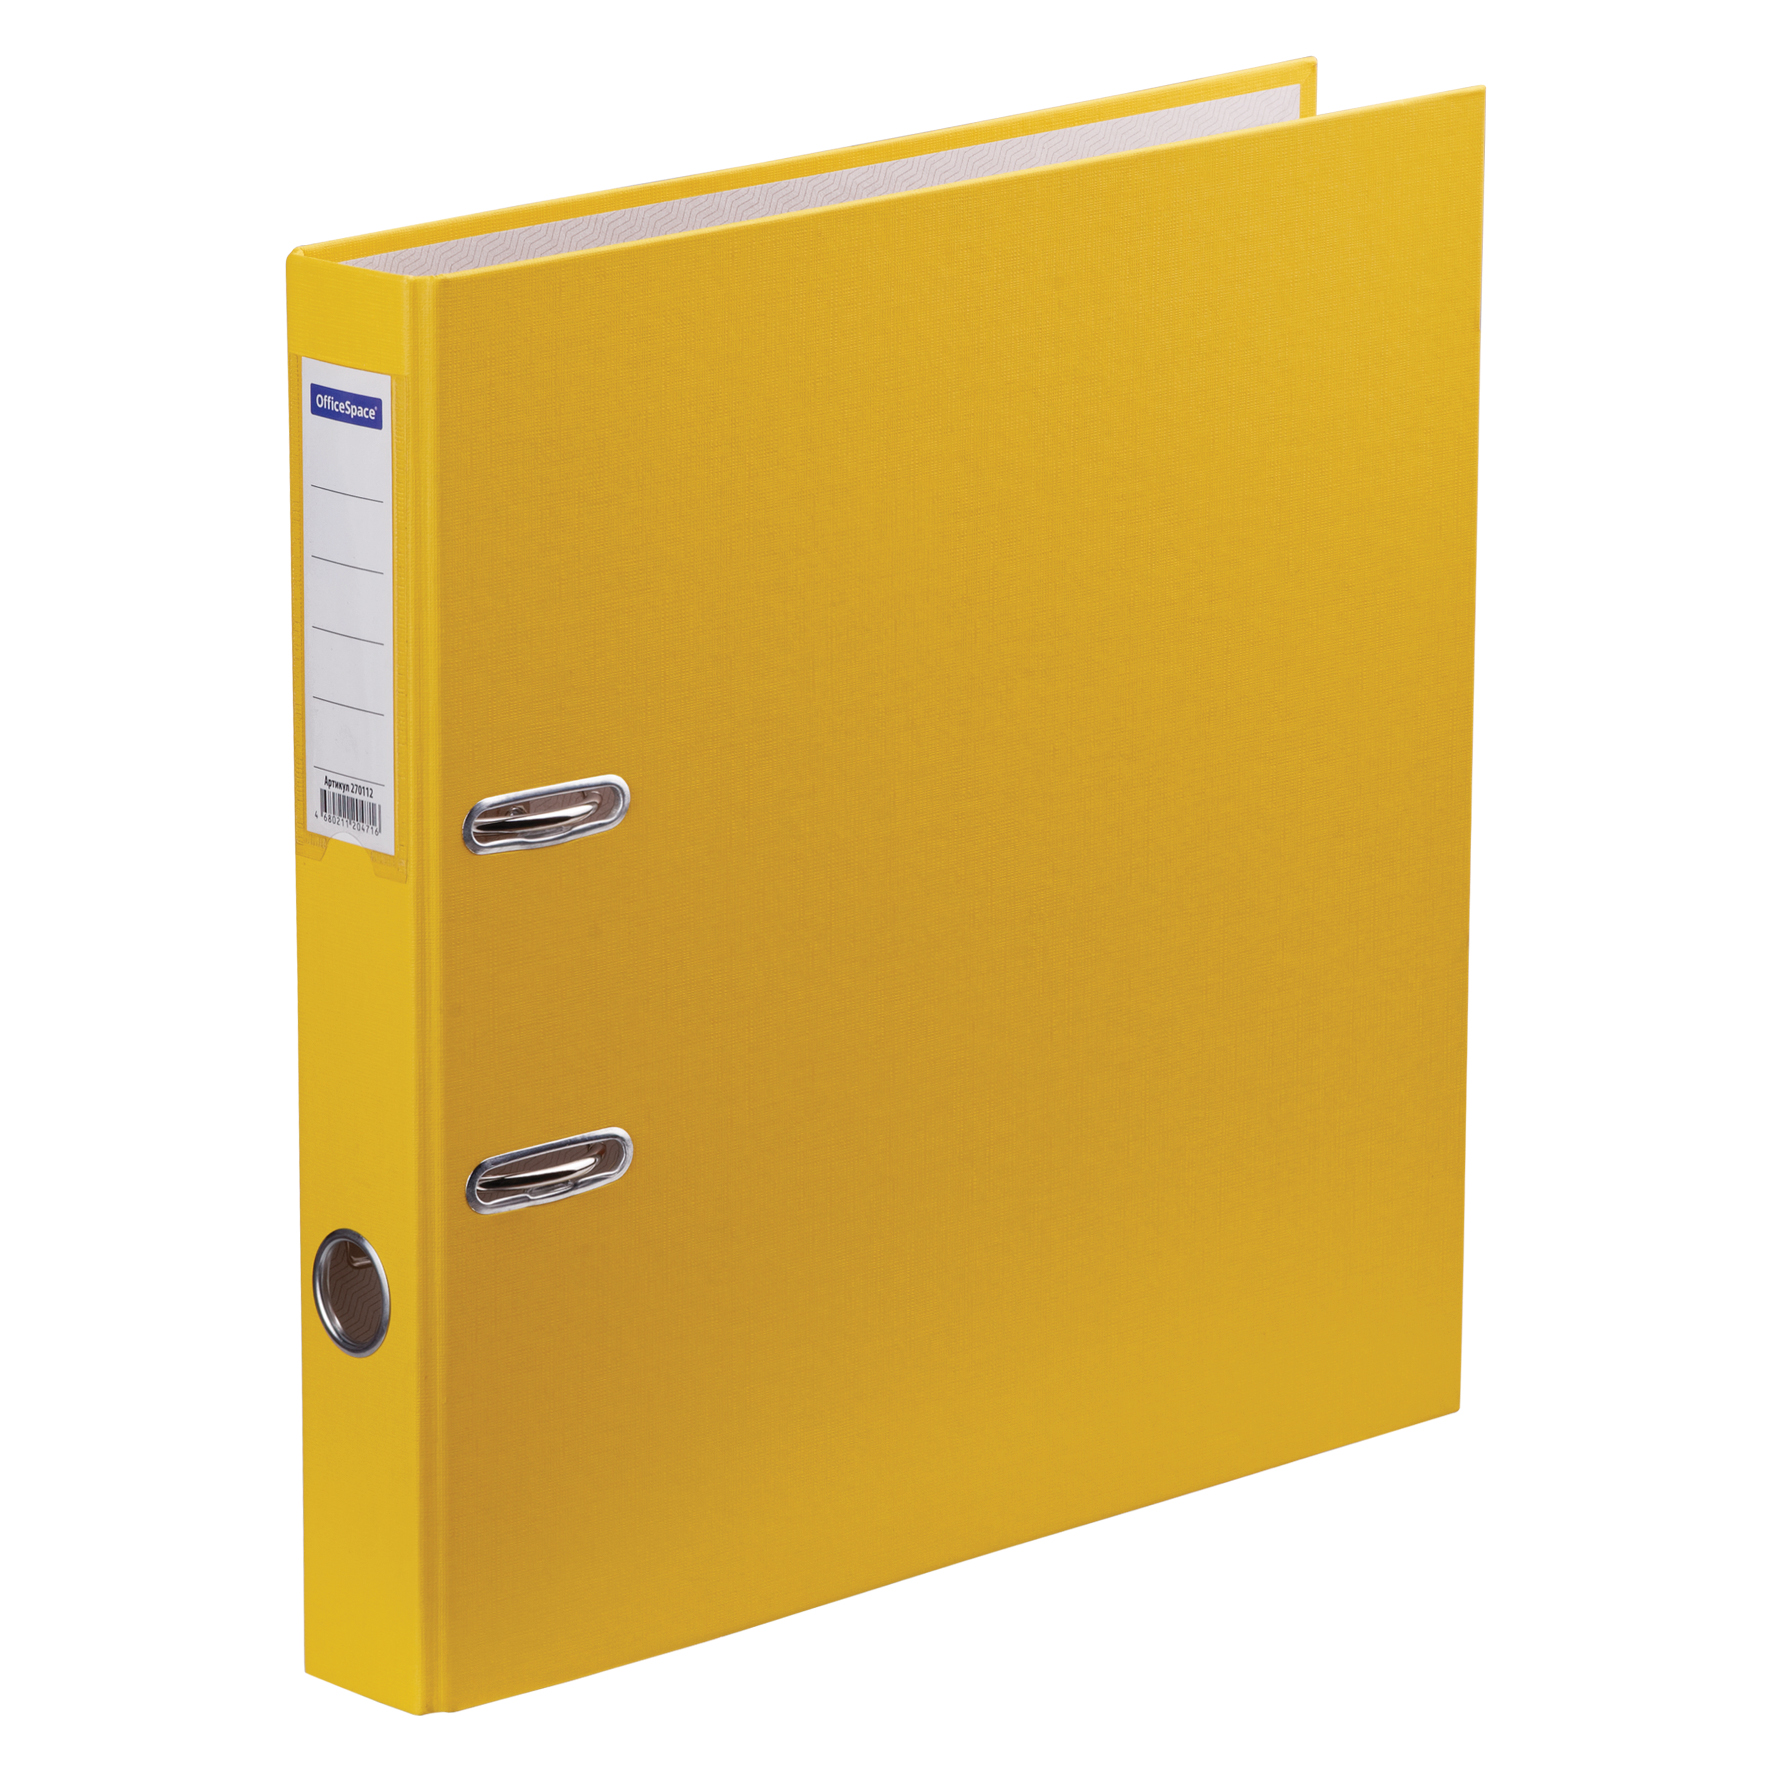 Папка-регистратор OfficeSpace, 50мм, бумвинил, с карманом на корешке, желтая